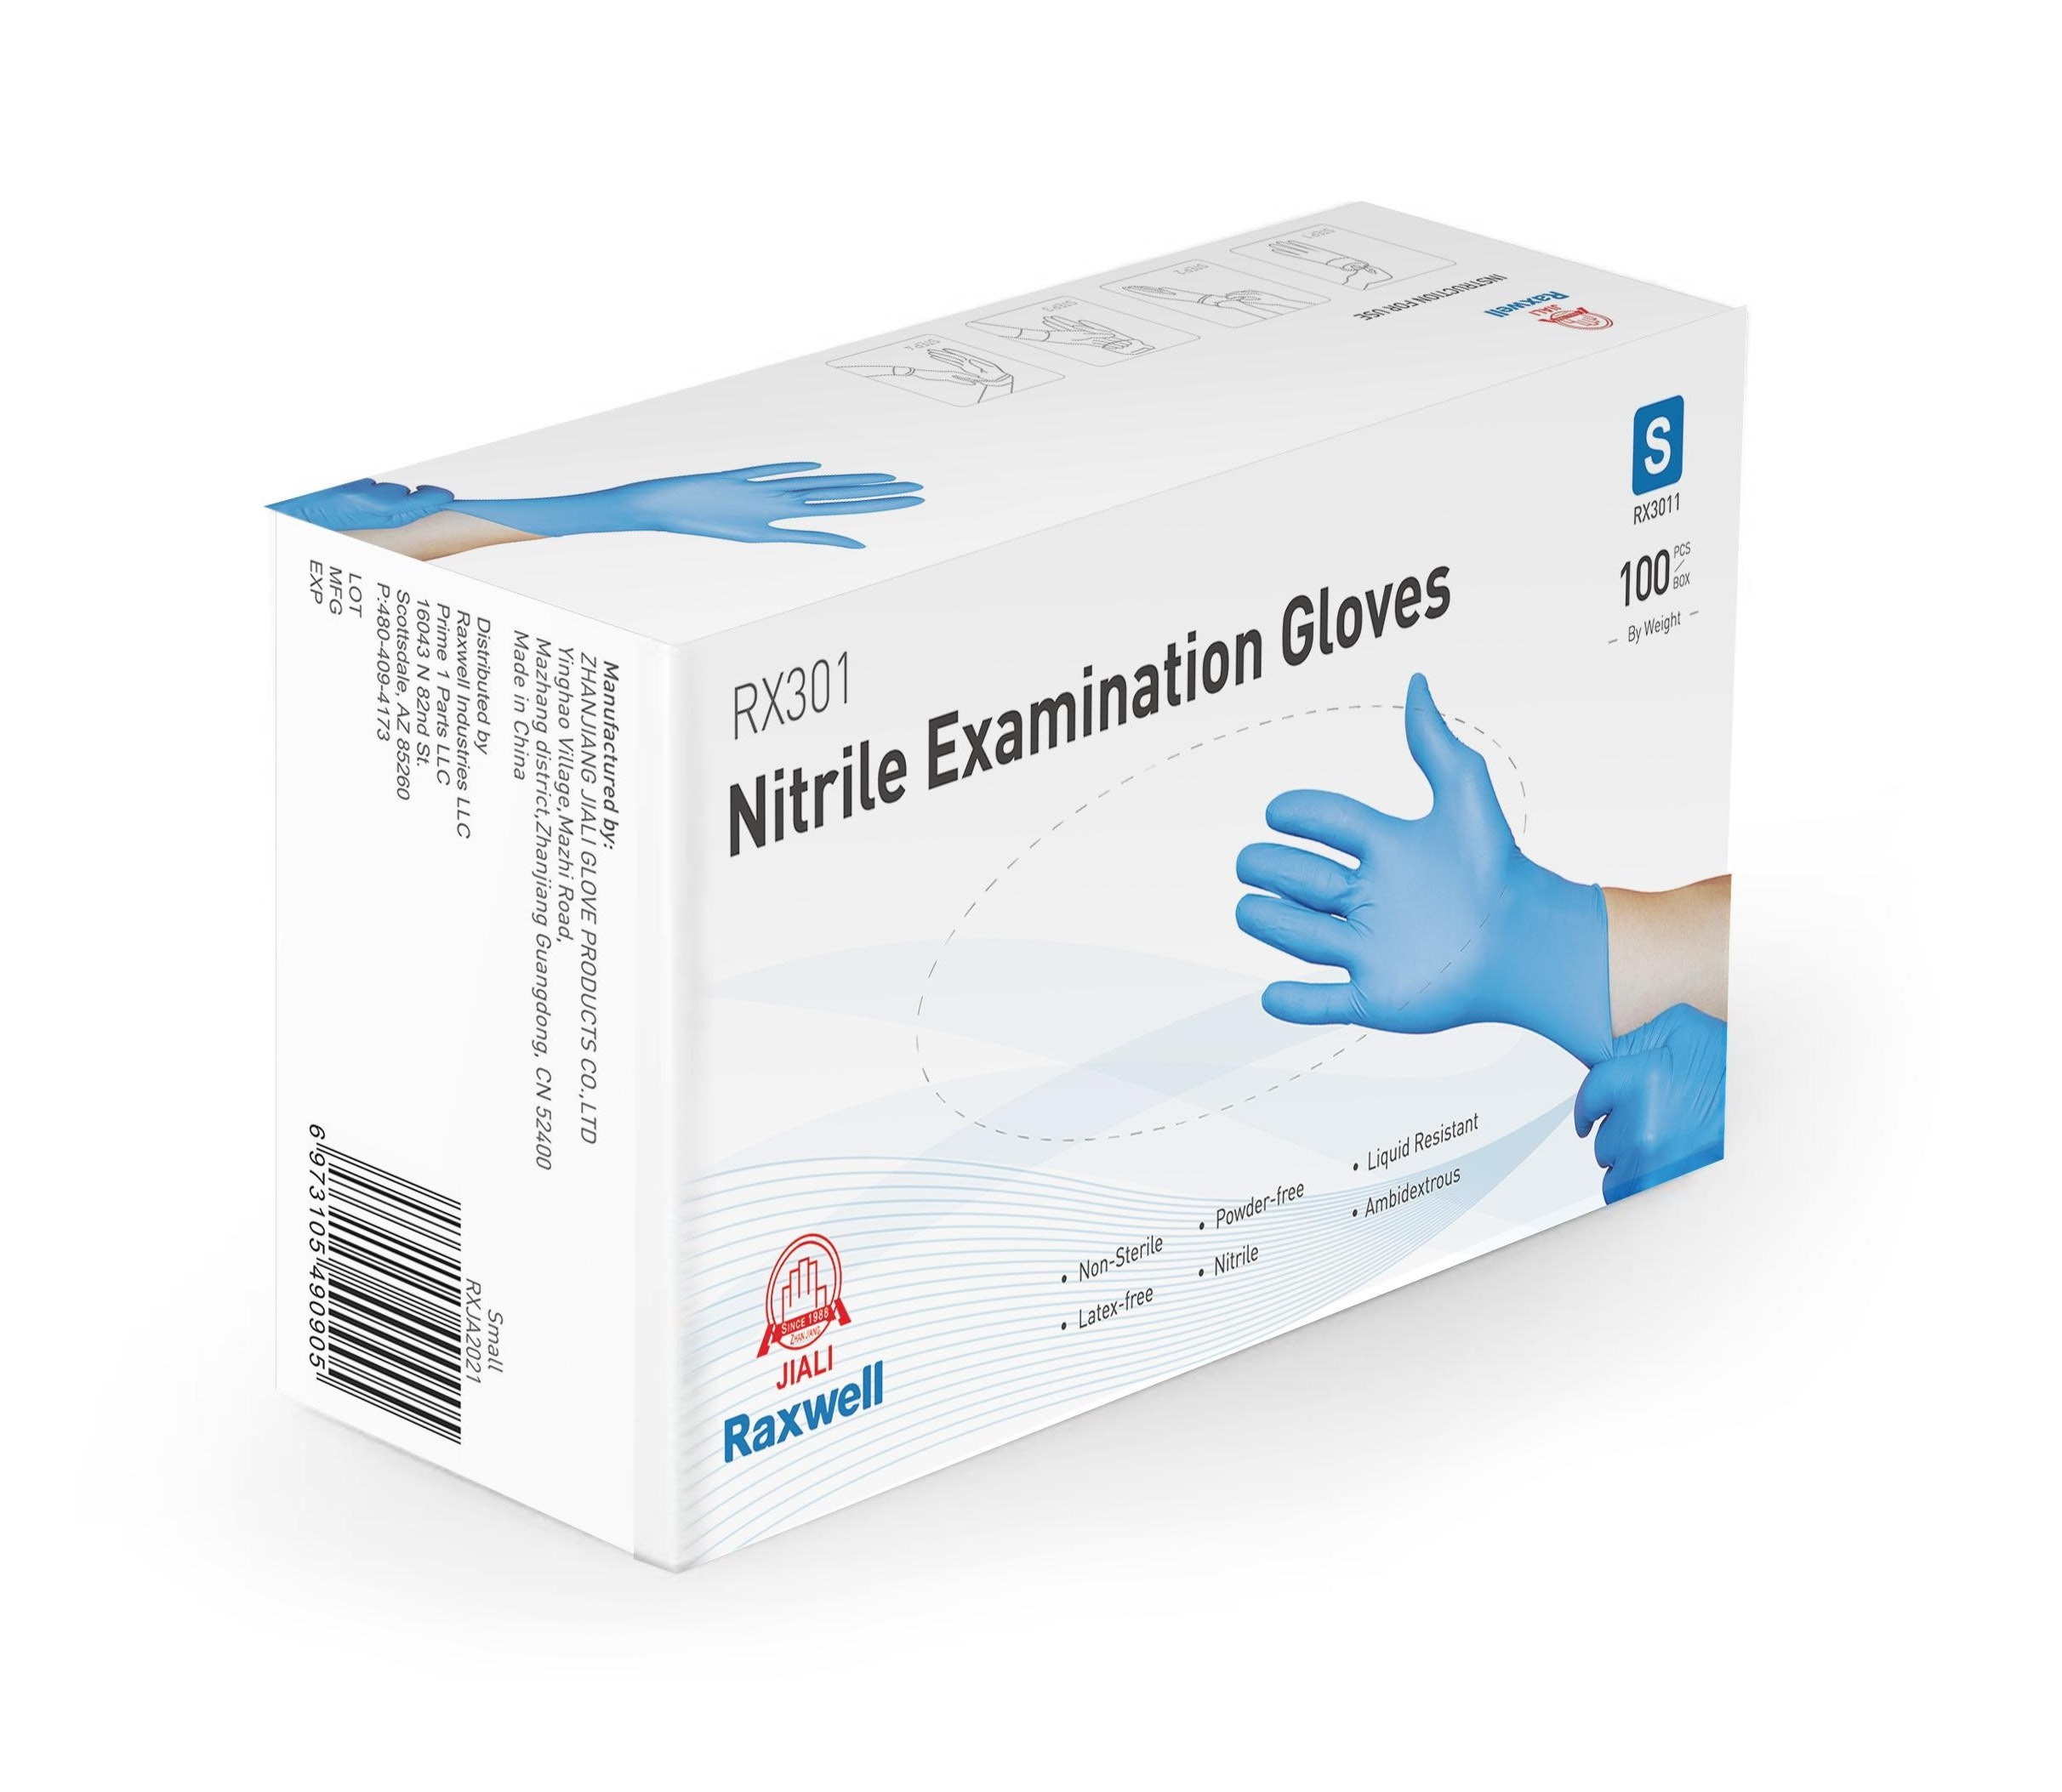 Raxwell FDA 510K Chemo 4mil Nitrile Examination Gloves. 140000Boxes. EXW Los Angeles Box of 100.